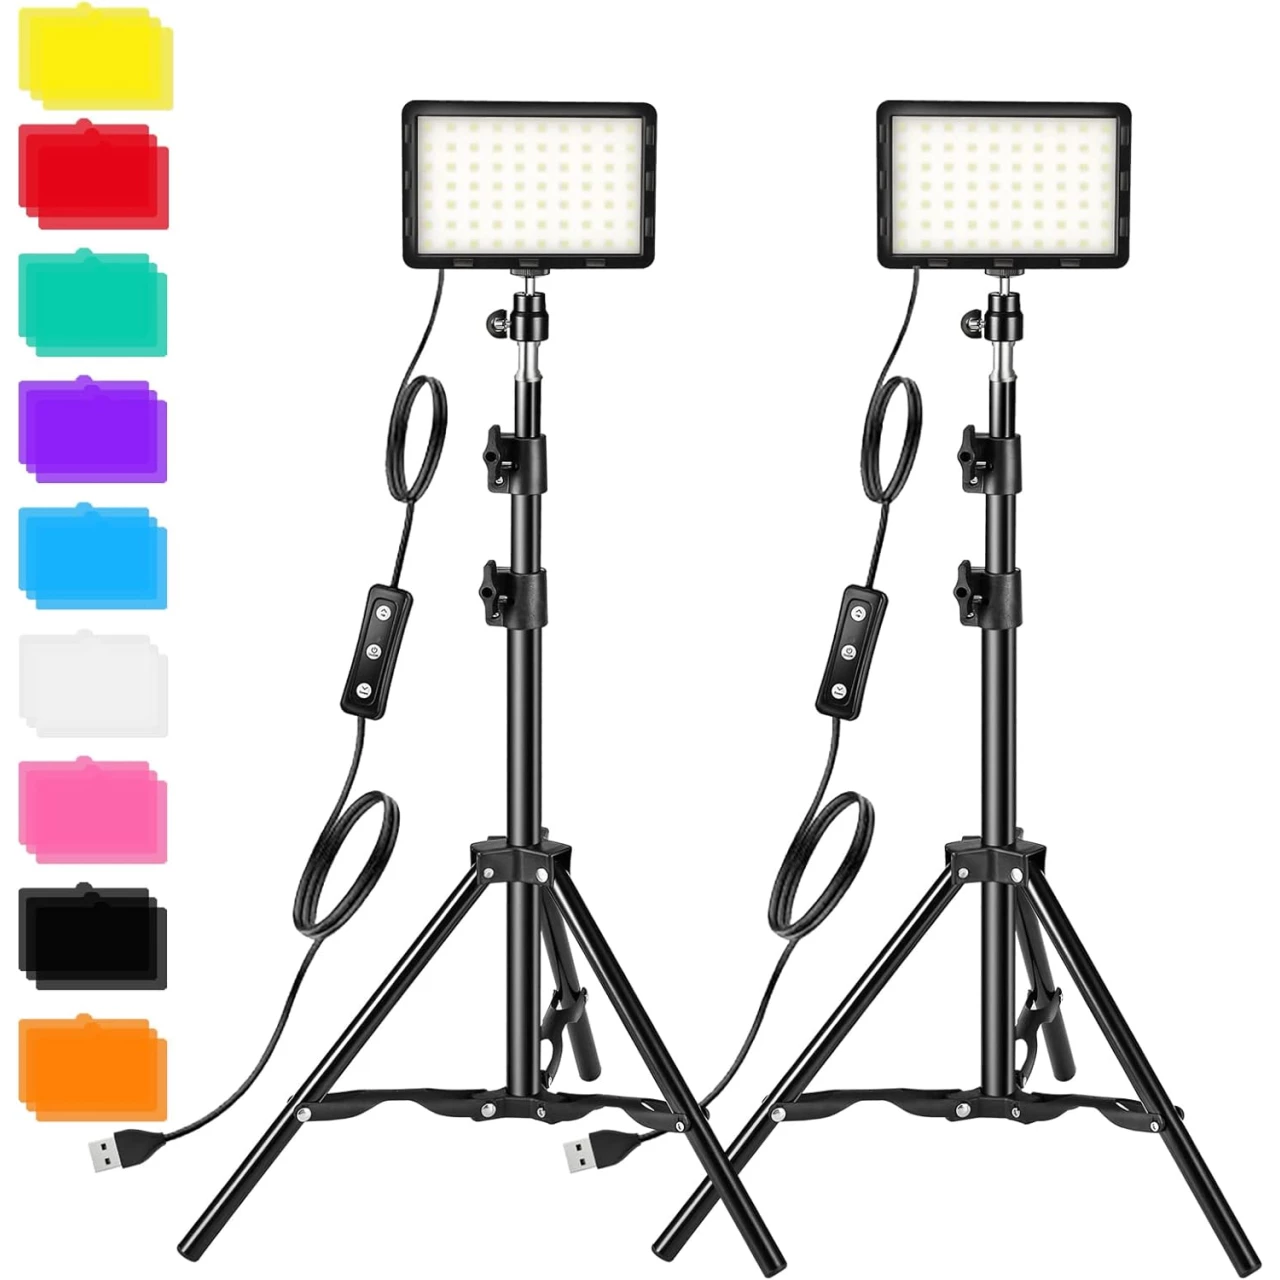 Photography Video Lighting Kit, LED Studio Streaming Lights